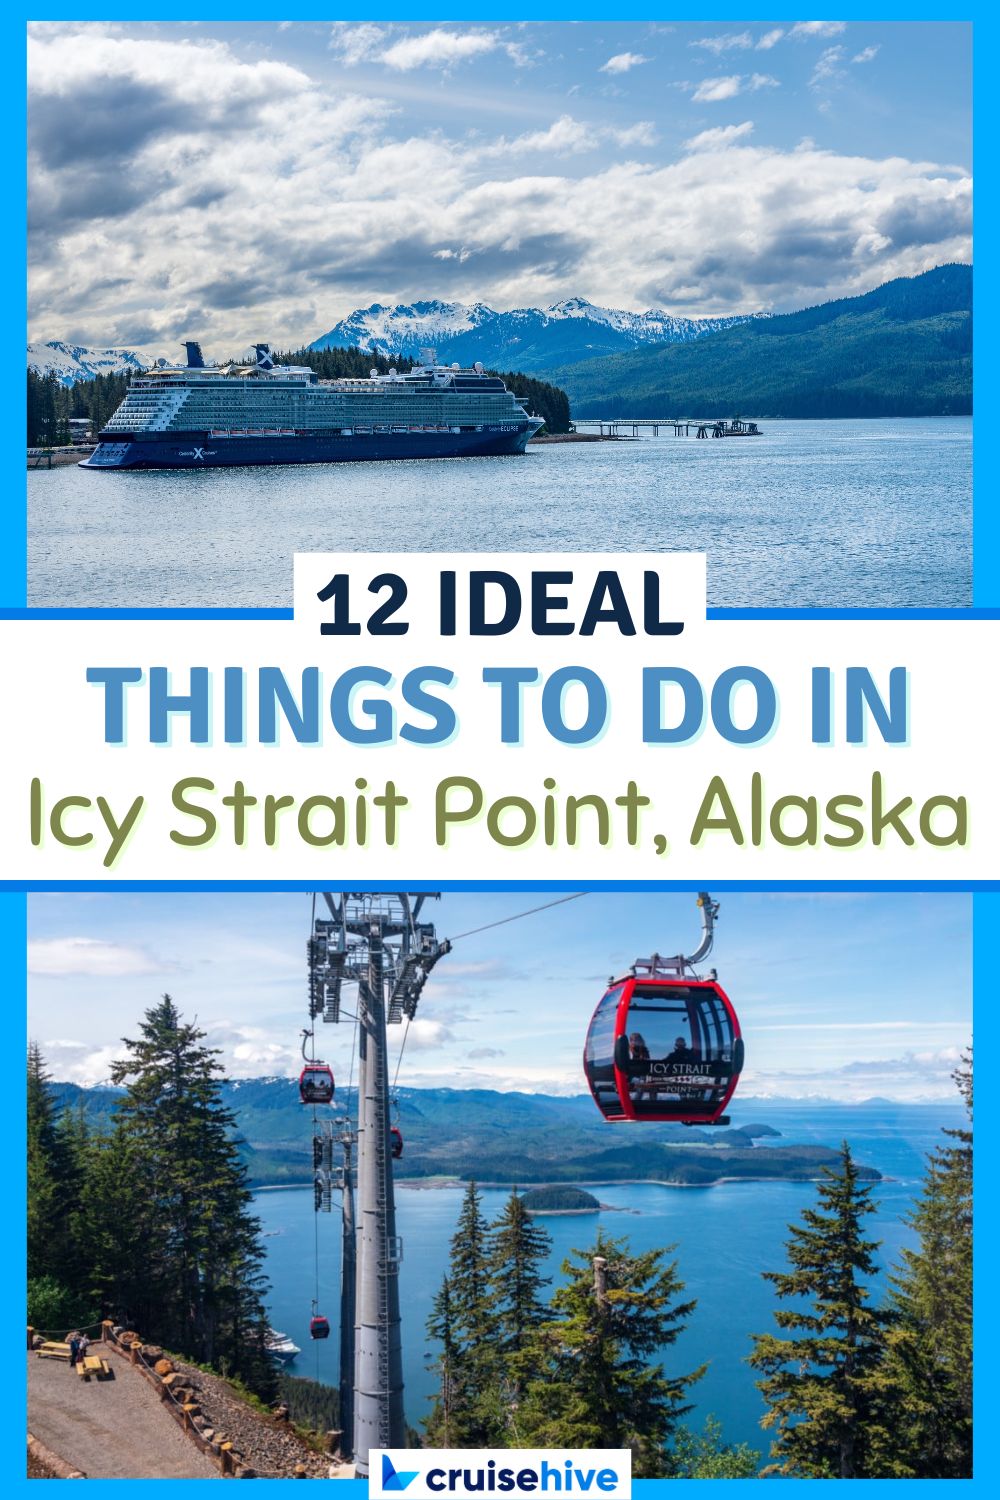 Icy Strait Point, Alaska